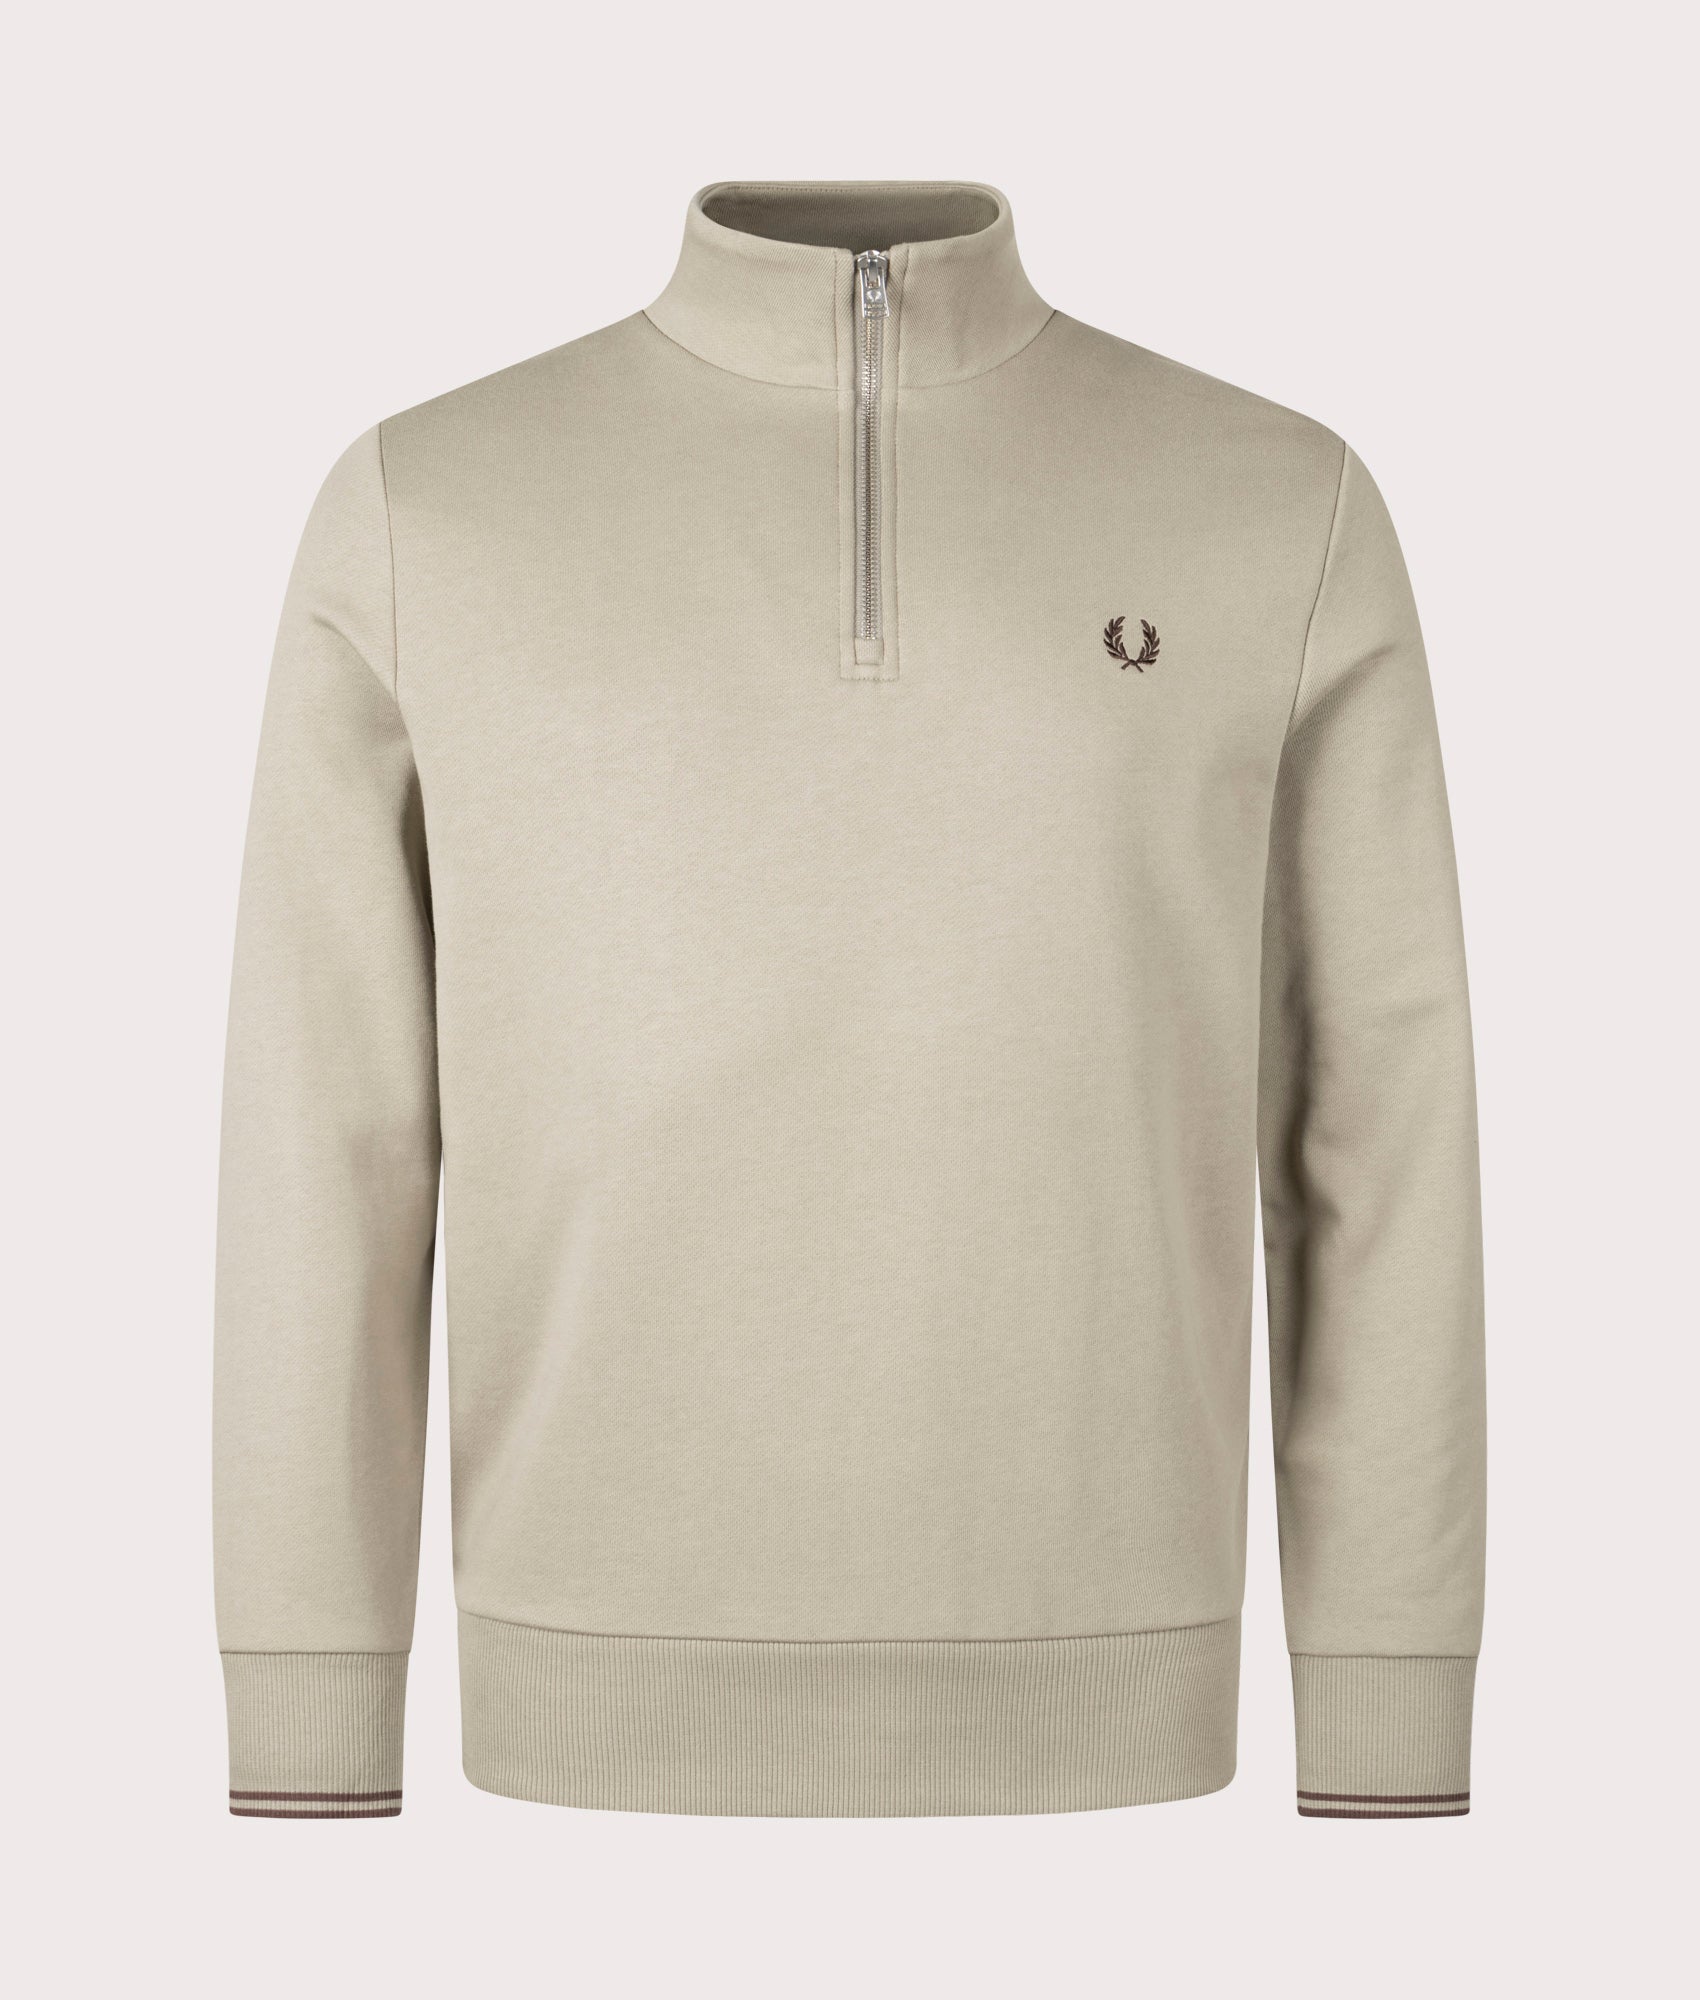 Fred Perry Mens Quarter Zip Sweatshirt - Colour: U84 Warm Grey/Carrington Road Brick - Size: Medium